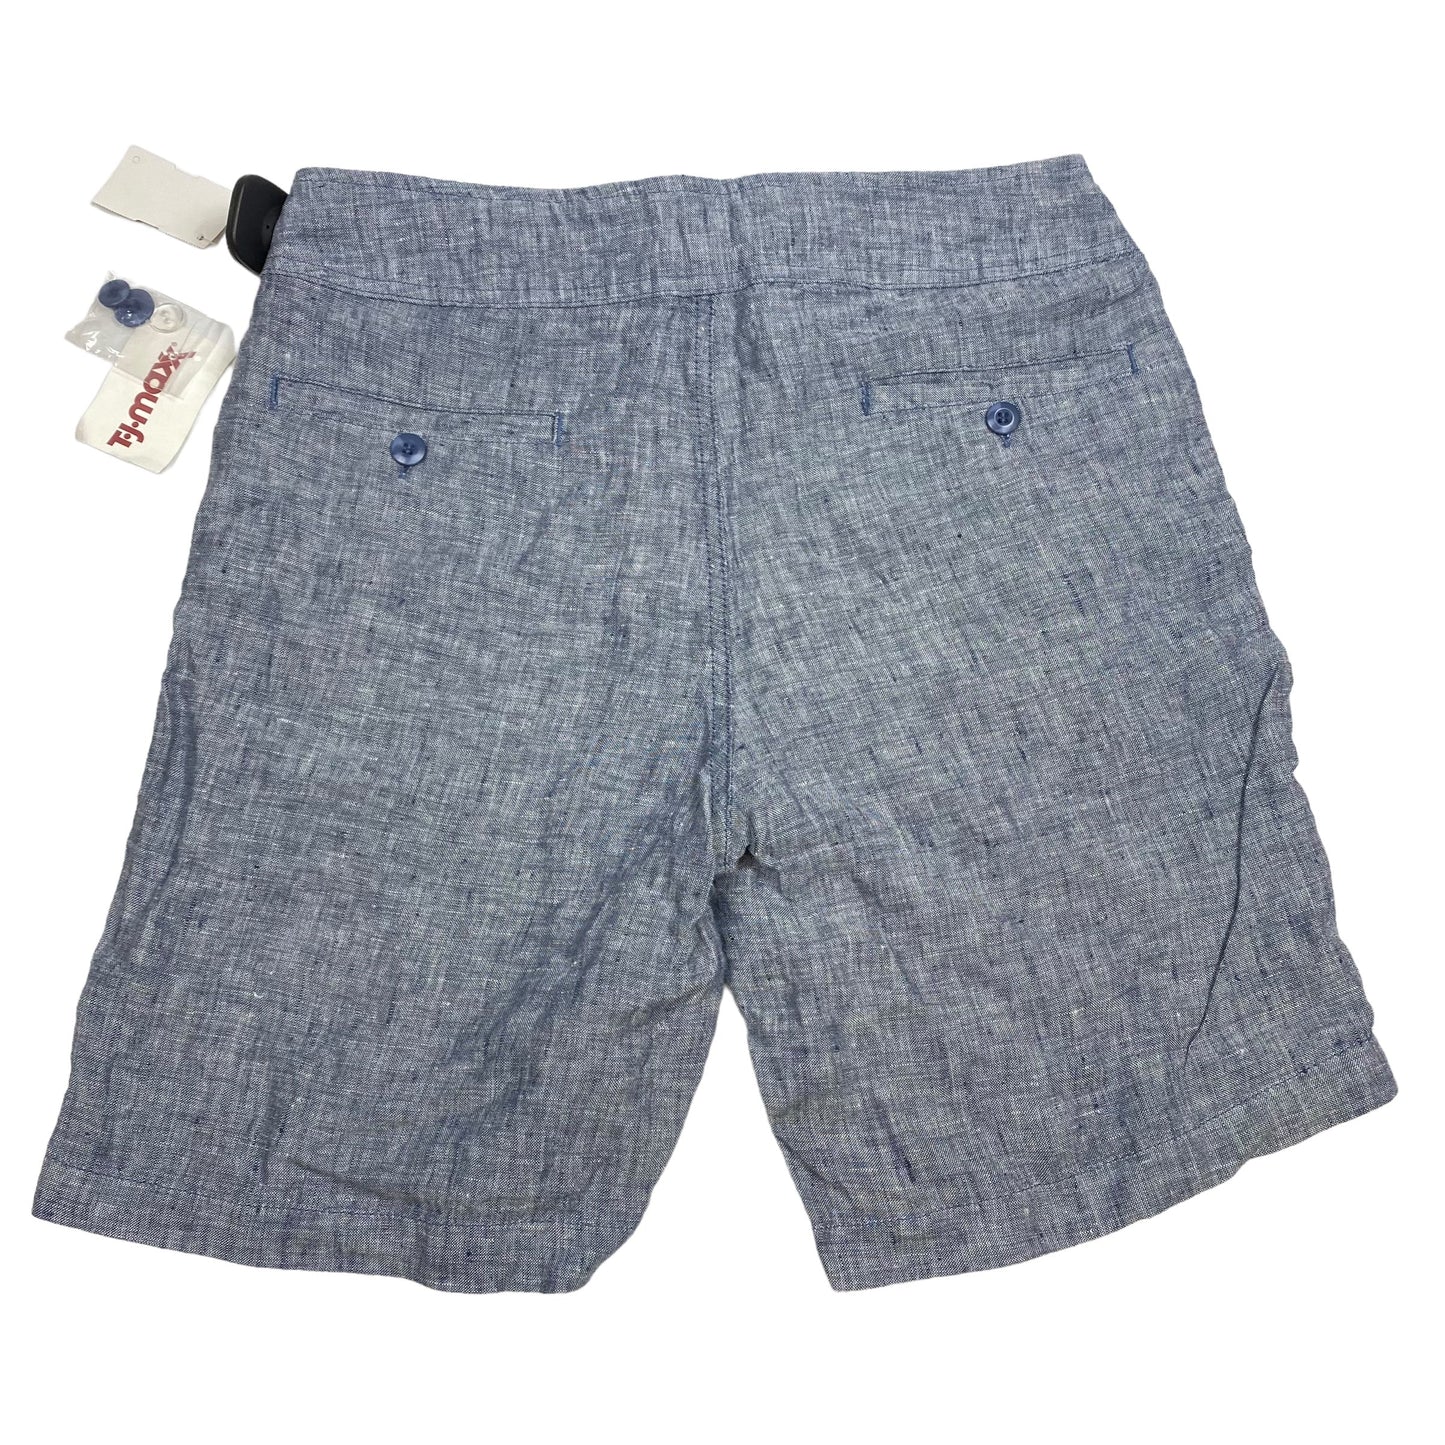 Shorts By Jones New York  Size: 4